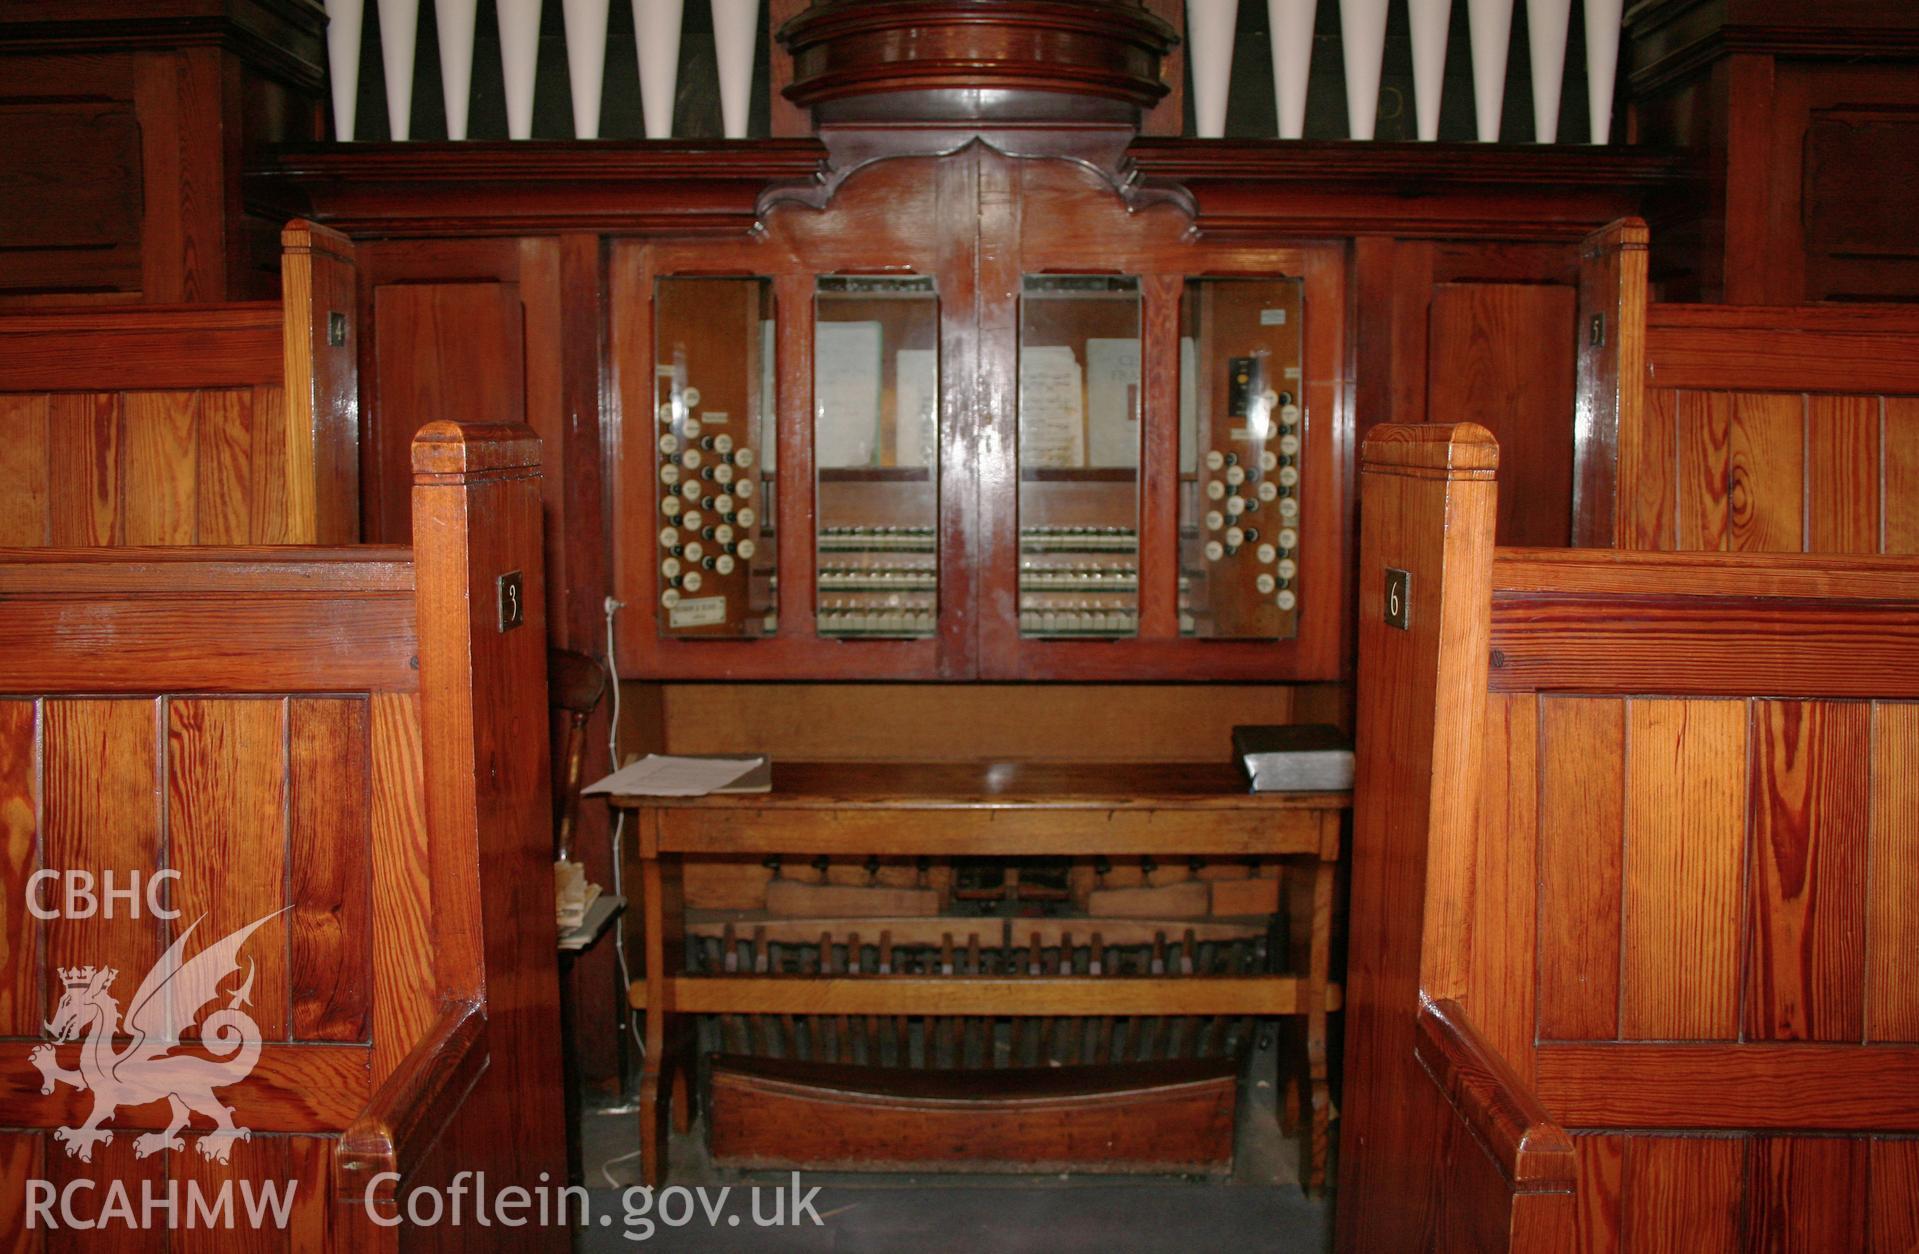 Interior, organ